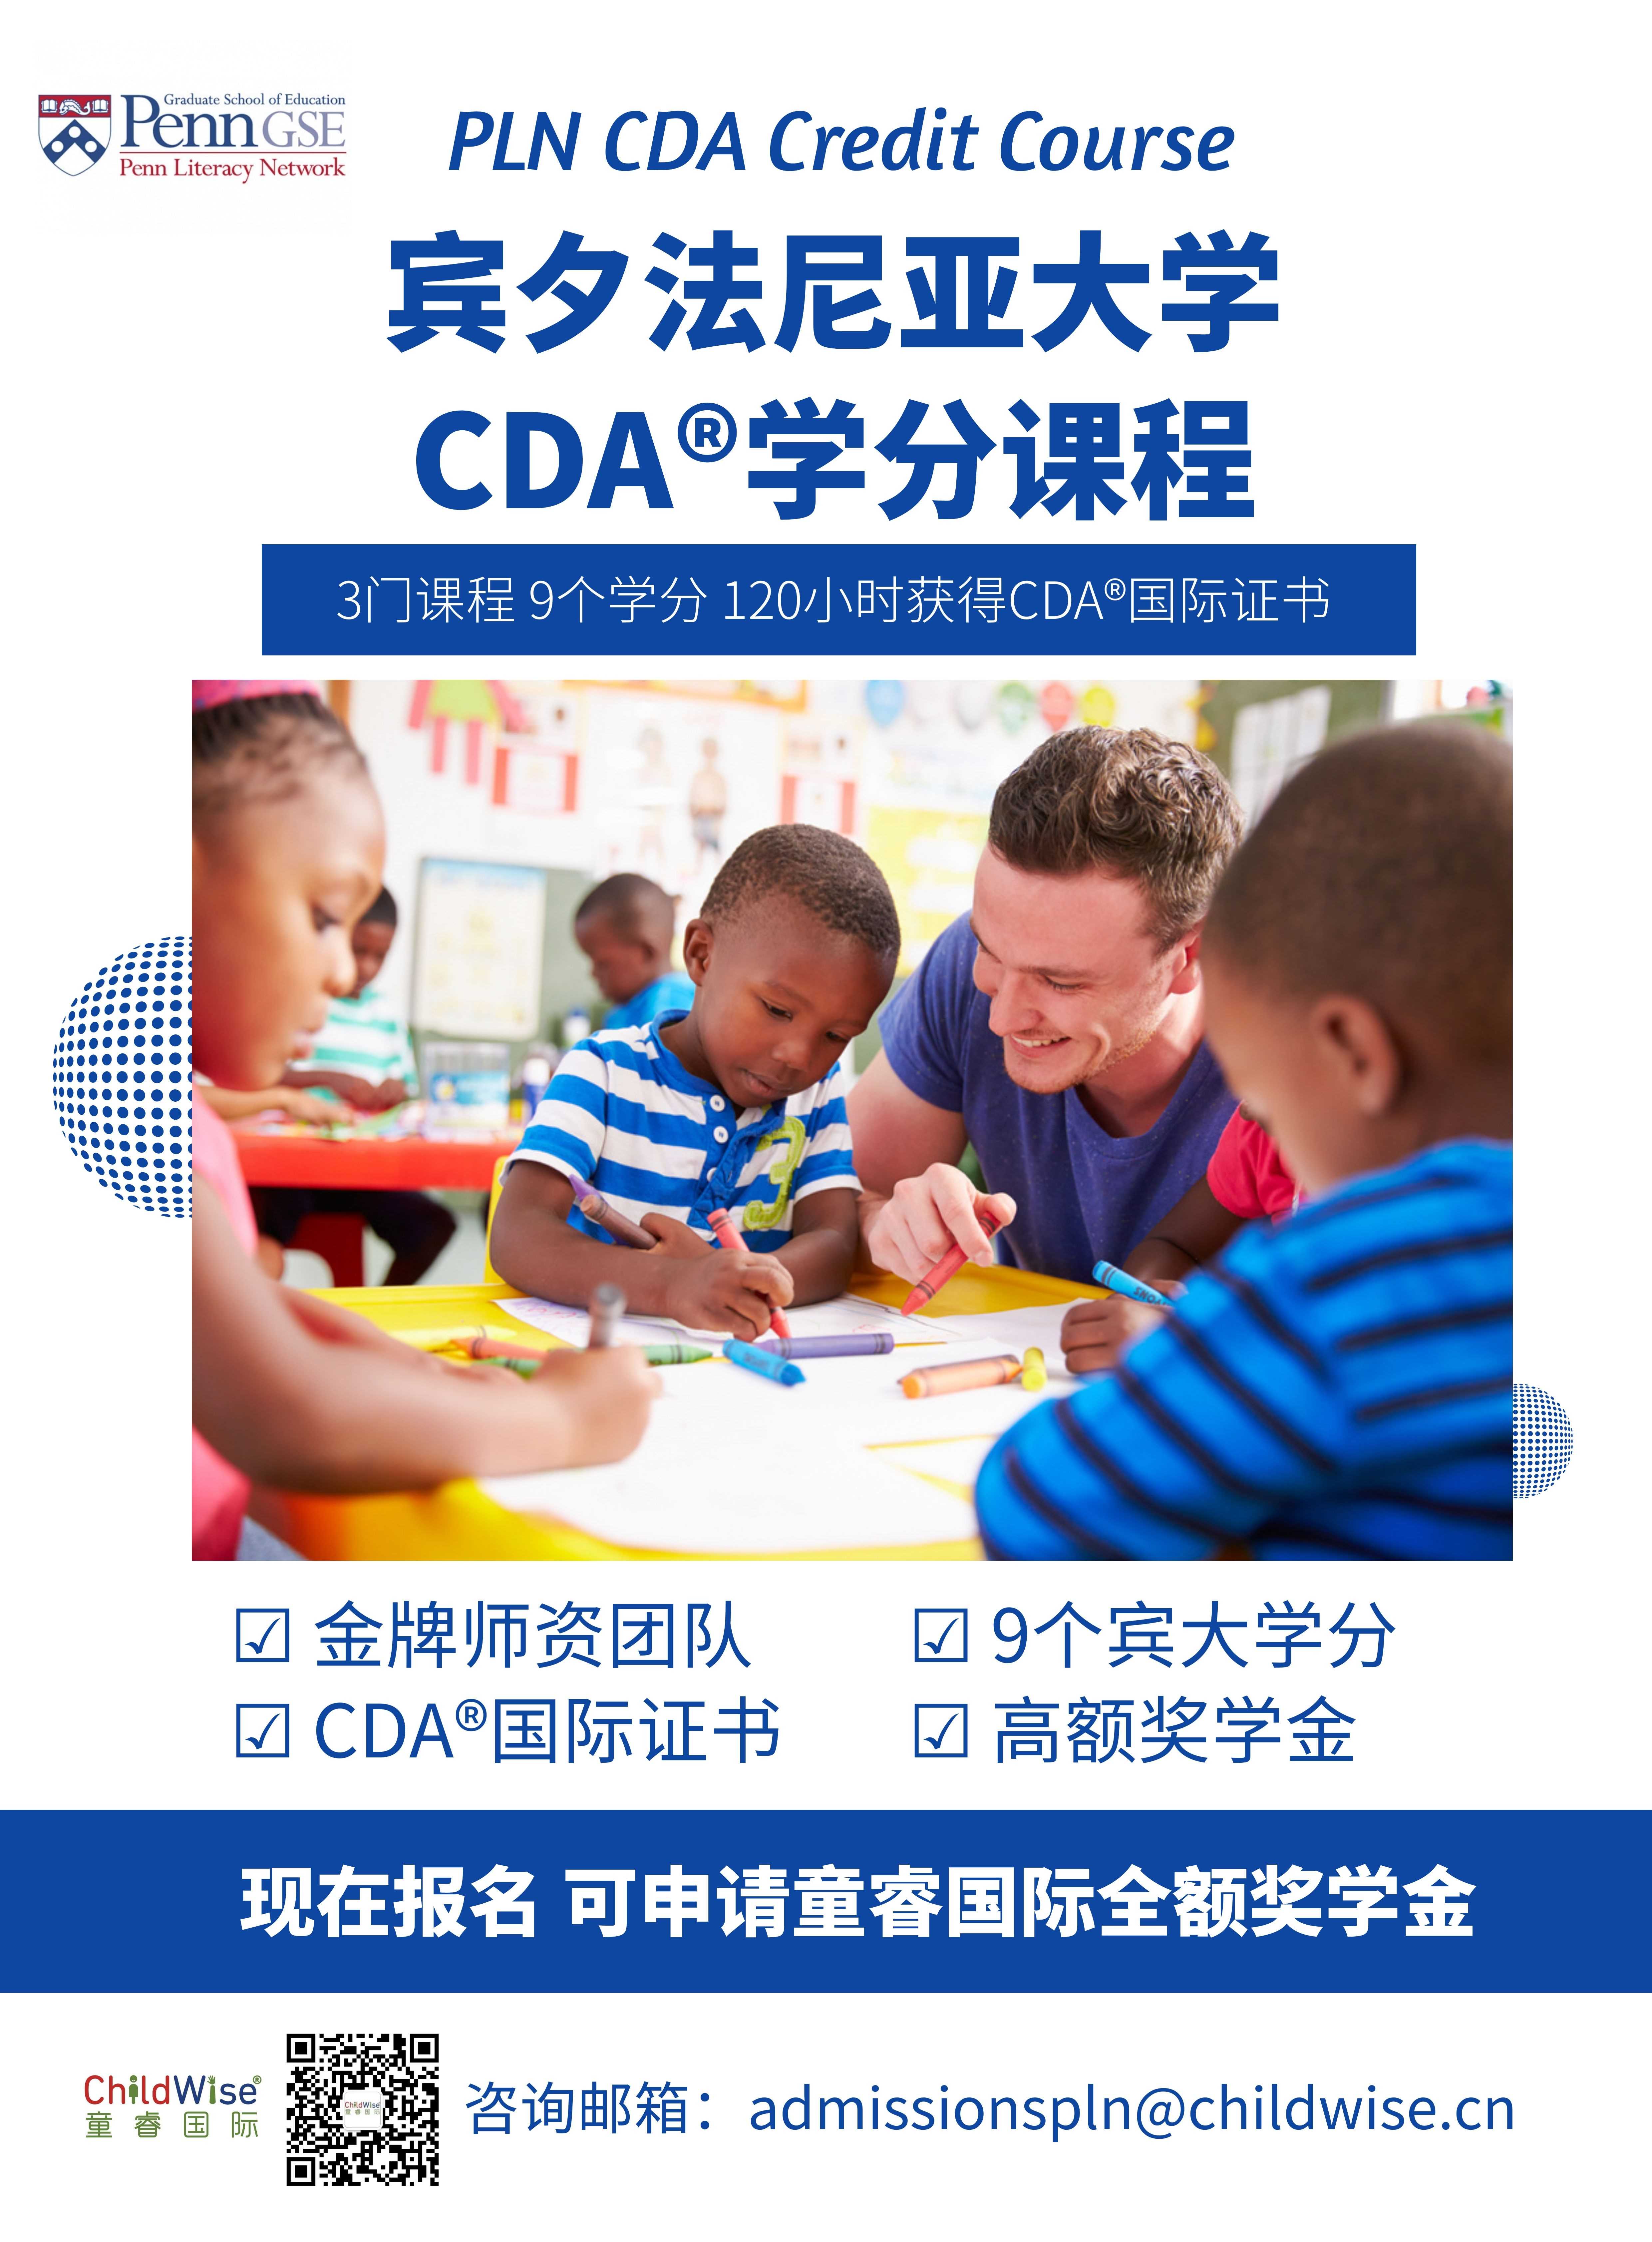 Childwise 童睿国际是美国幼师职业资格认证机构cda Council在大中华区的唯一授权机构